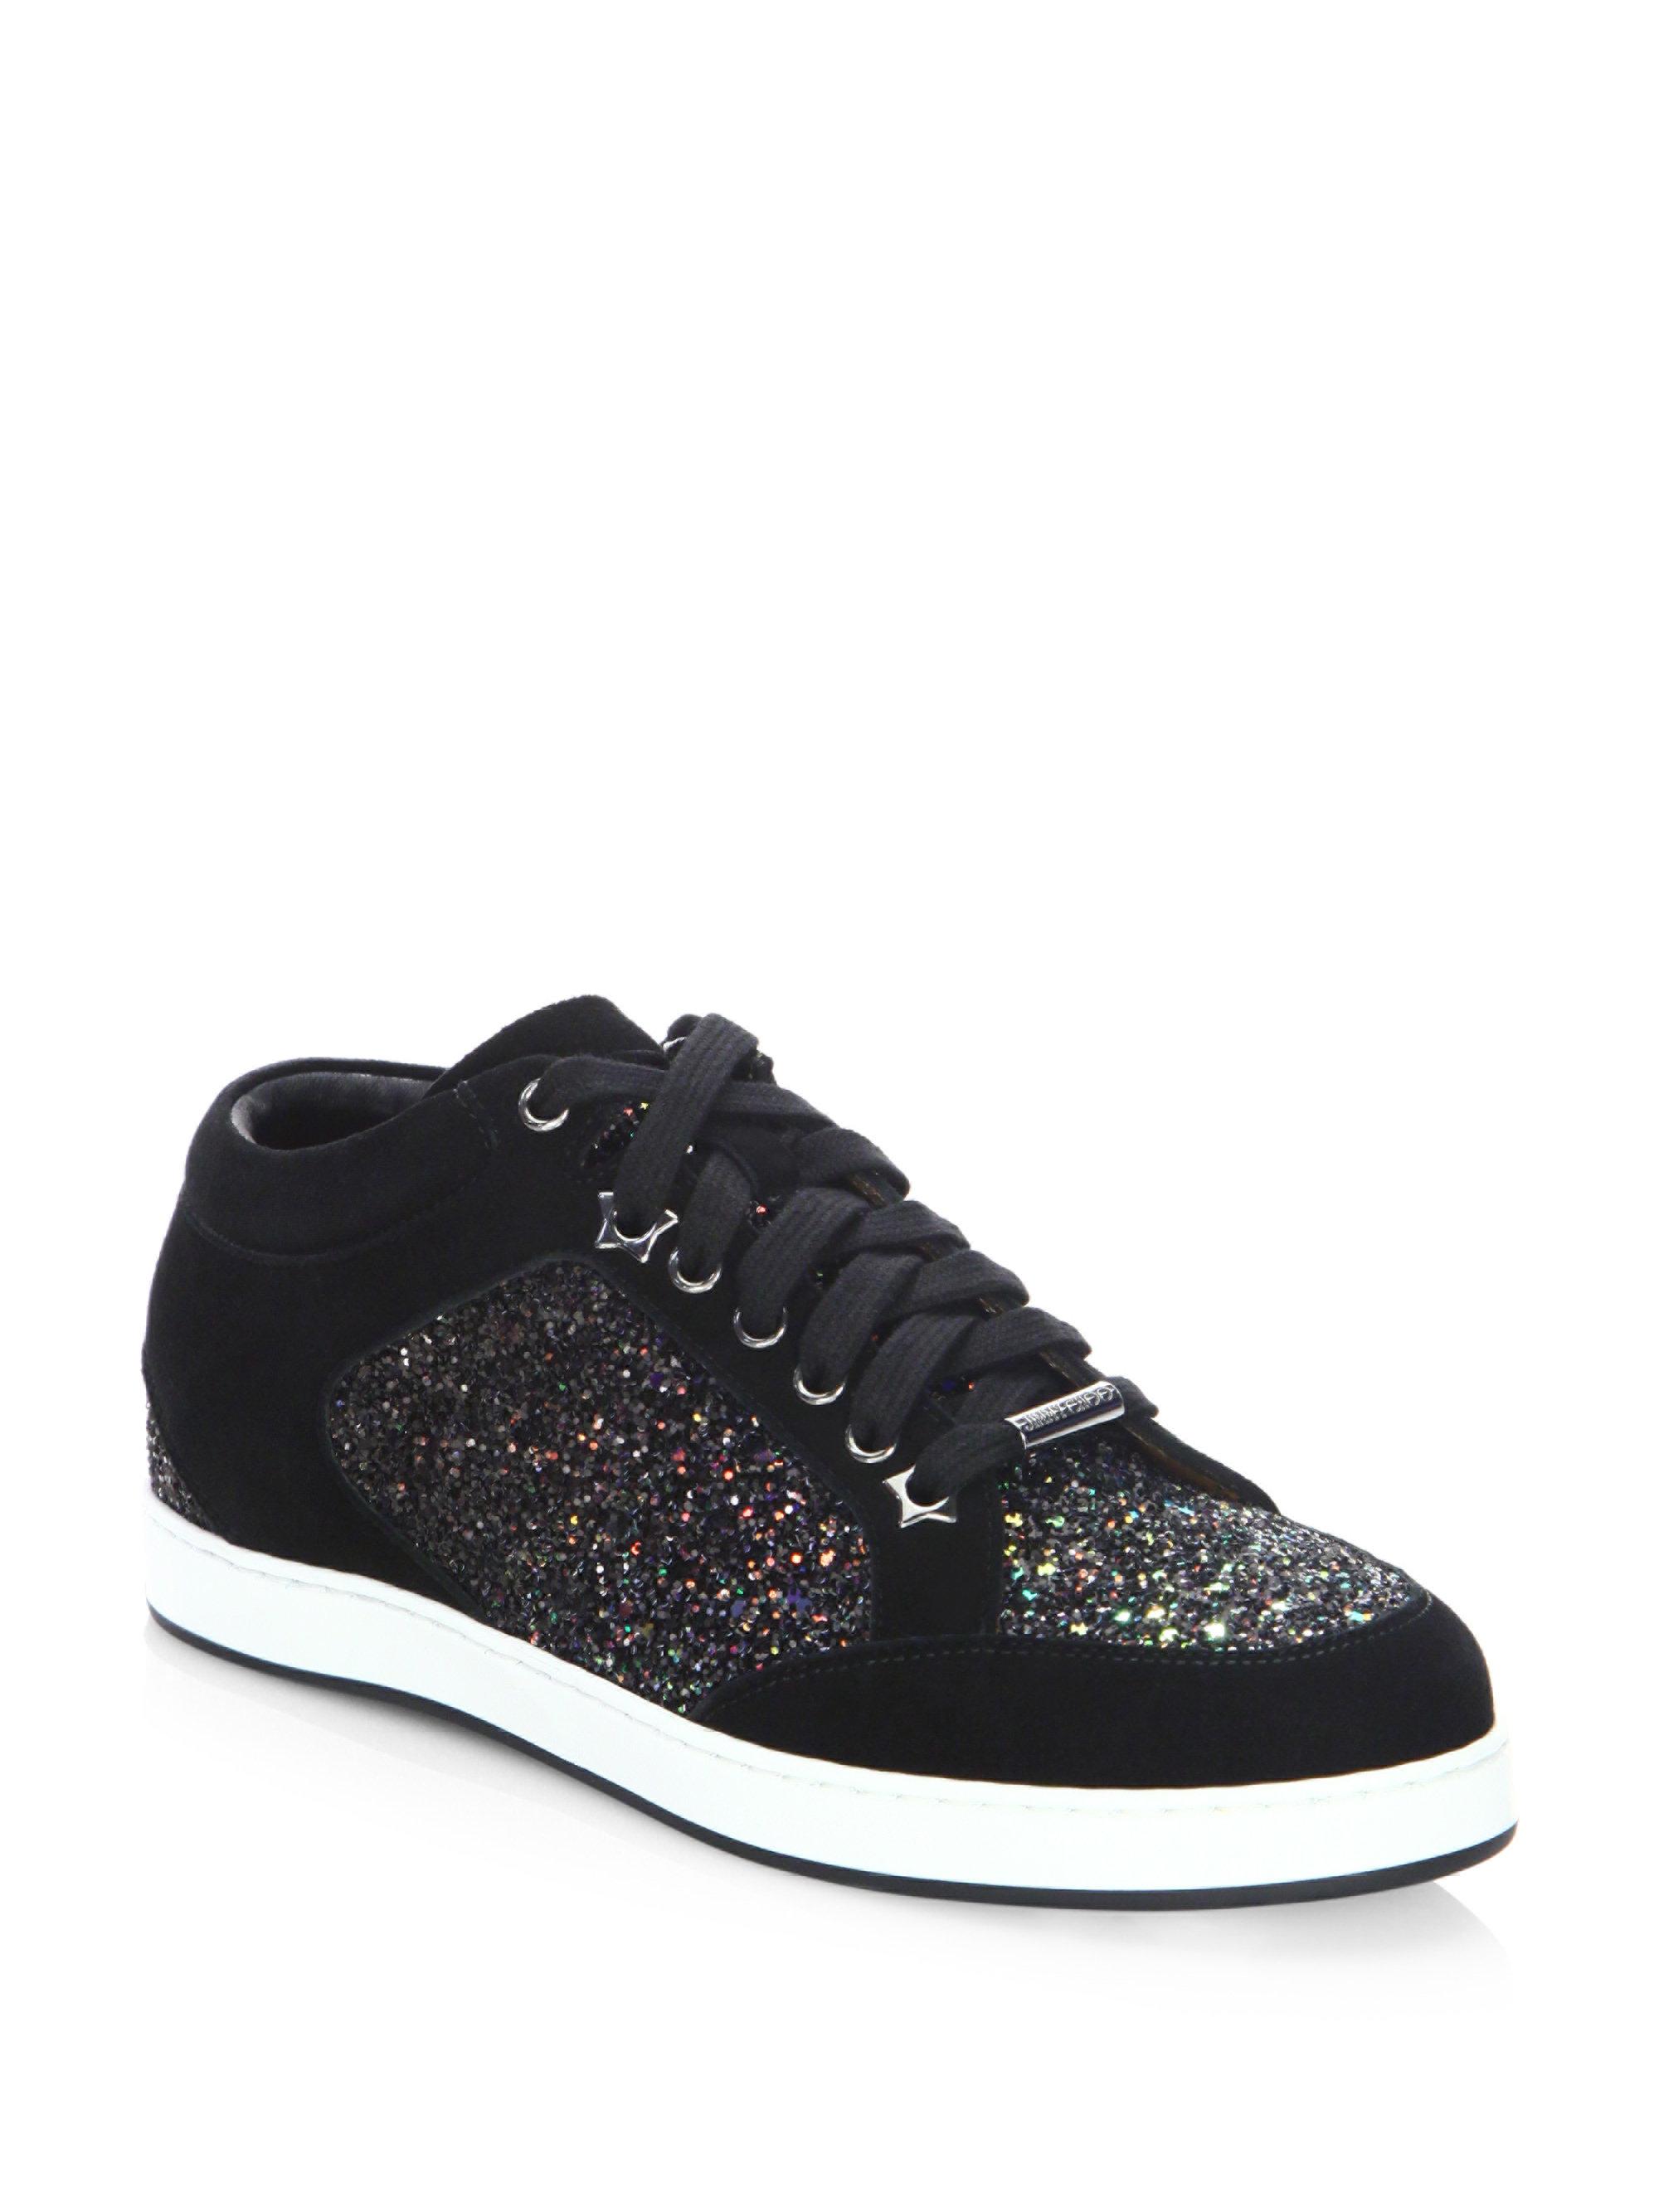 Choo Miami Glitter & Suede Sneakers in Black | Lyst